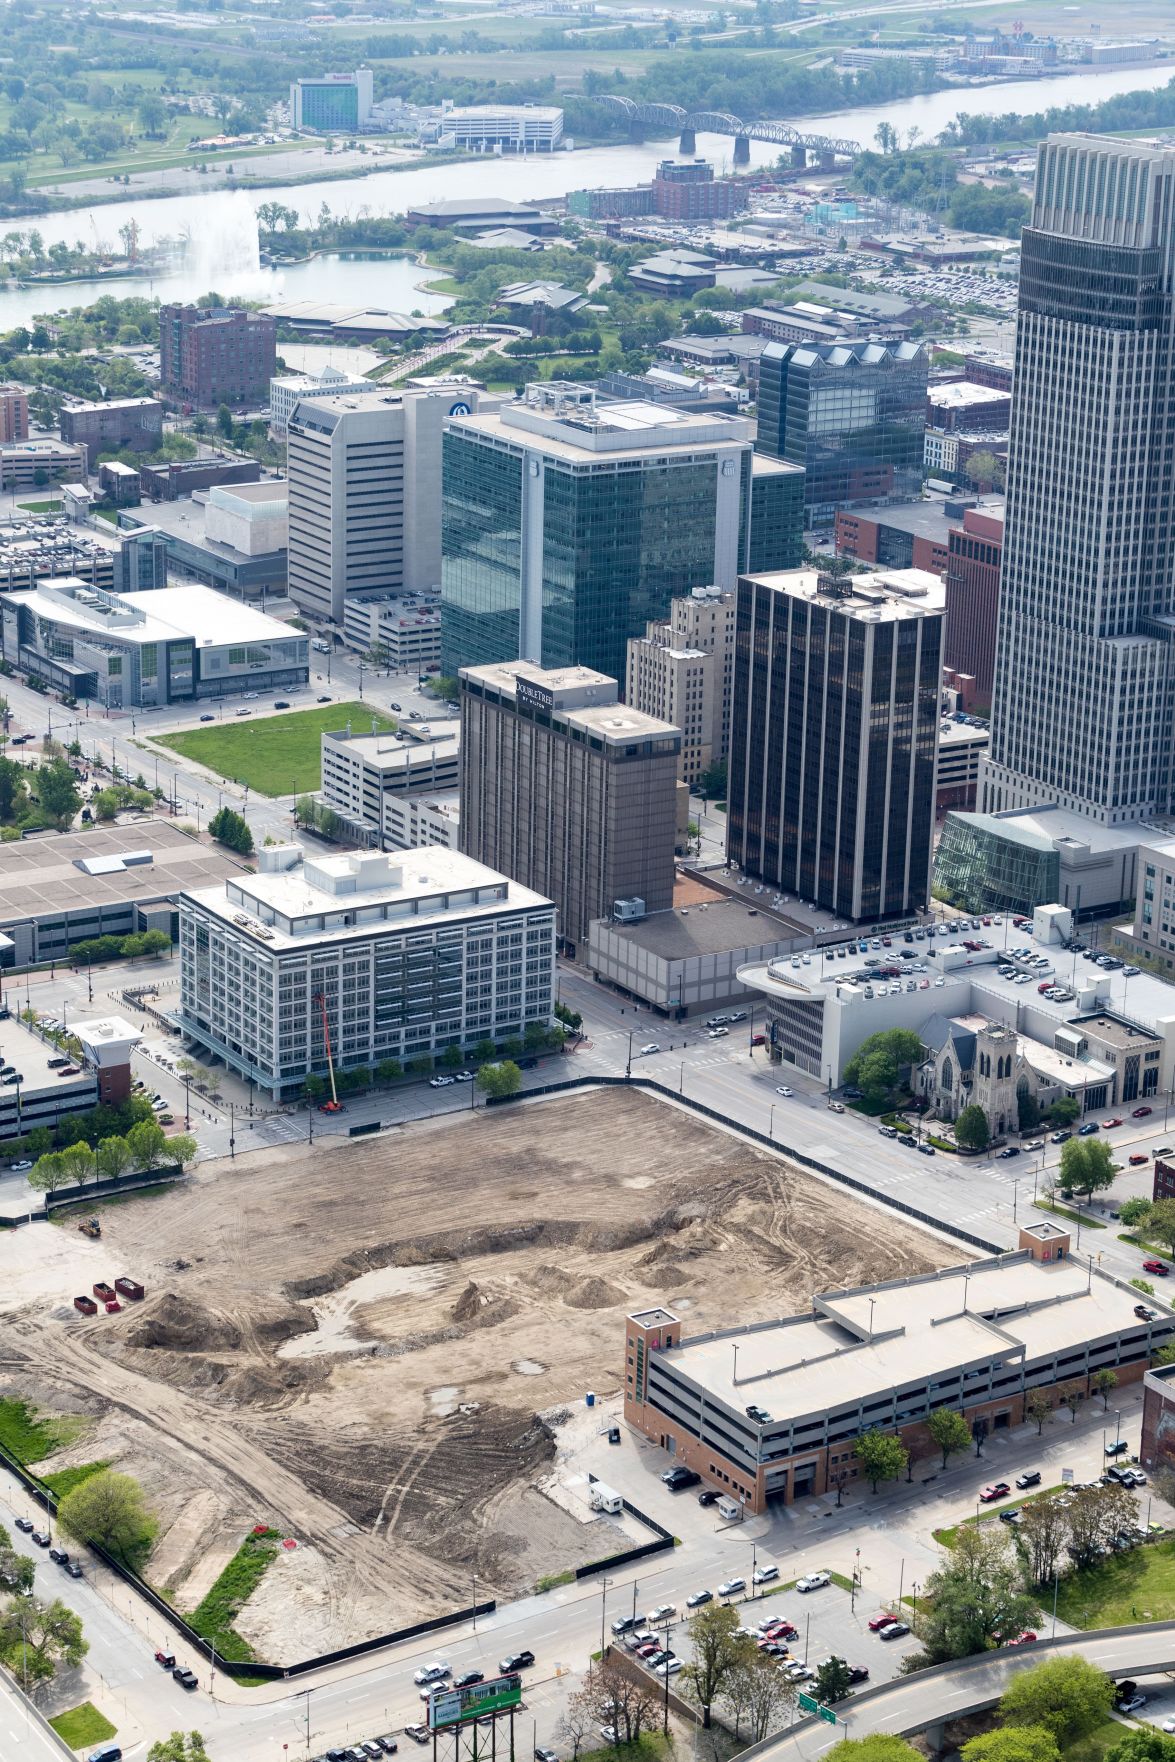 20 aerial photos of the Omaha area in 2017 | Omaha Metro | omaha.com